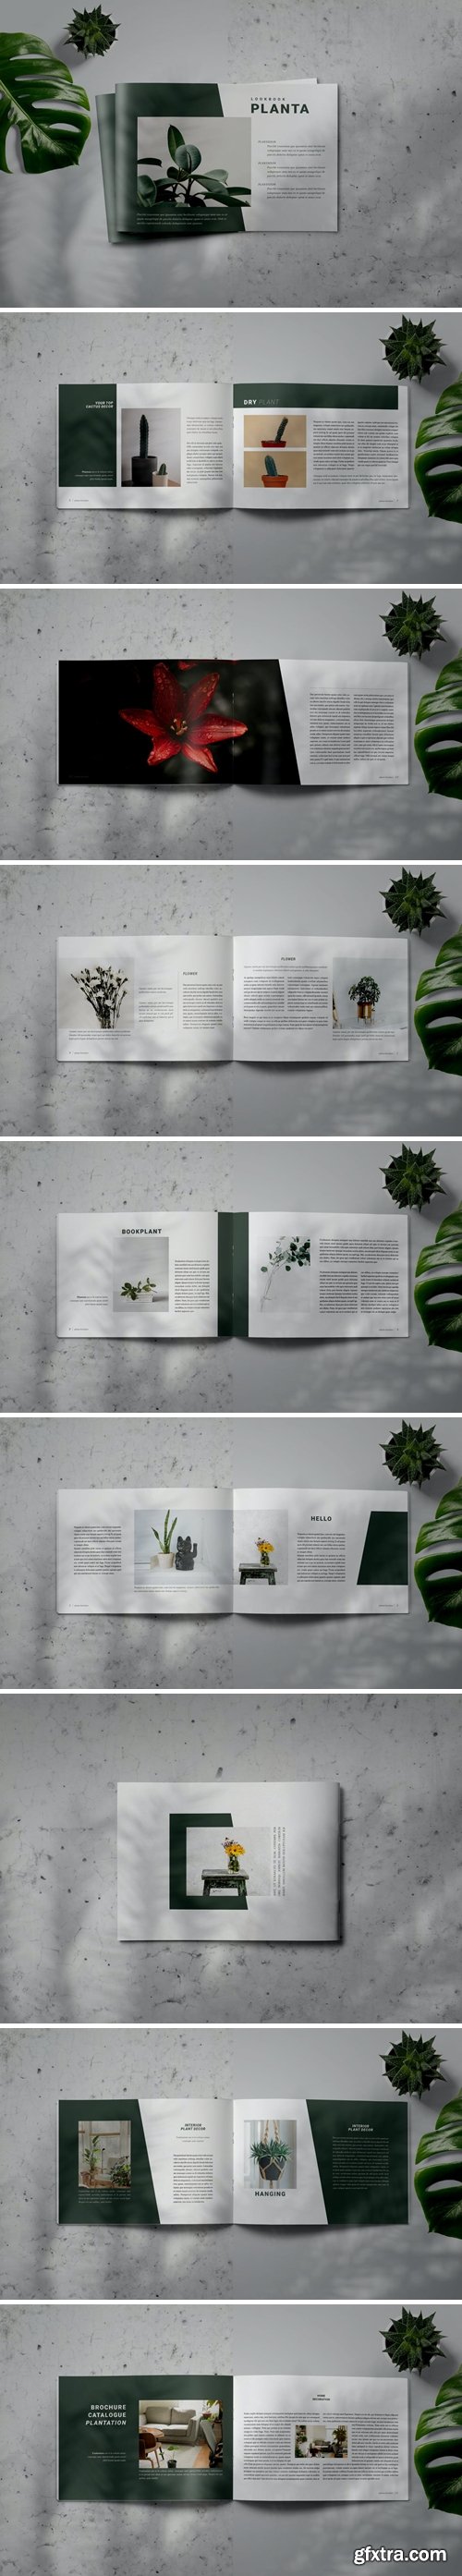 PLANTA - Indesign Brochure Catalog Template